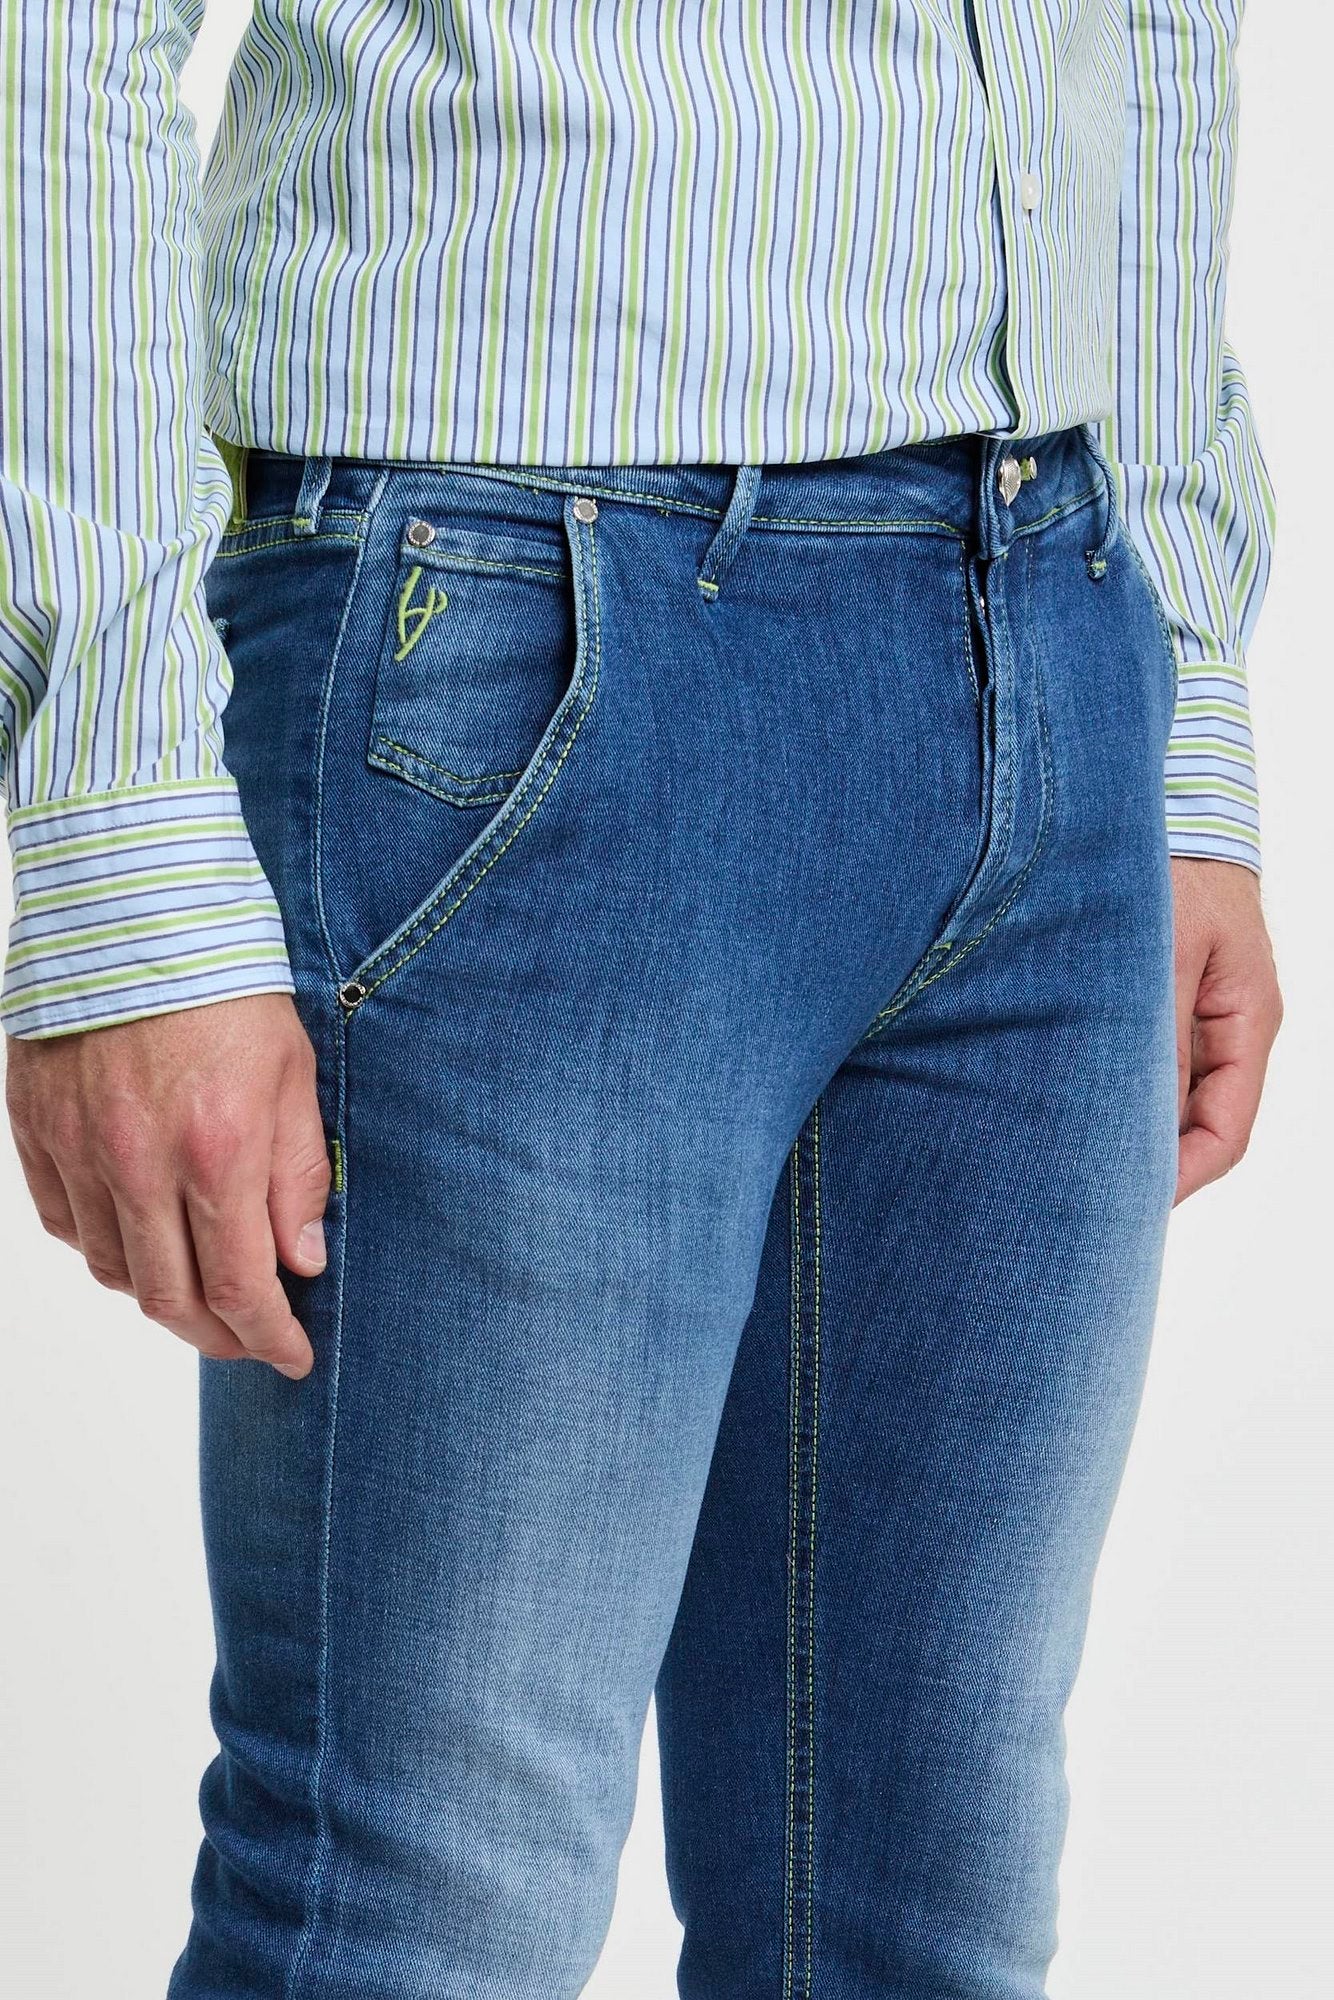 Handpicked Jeans Parma in Cotton Denim-4